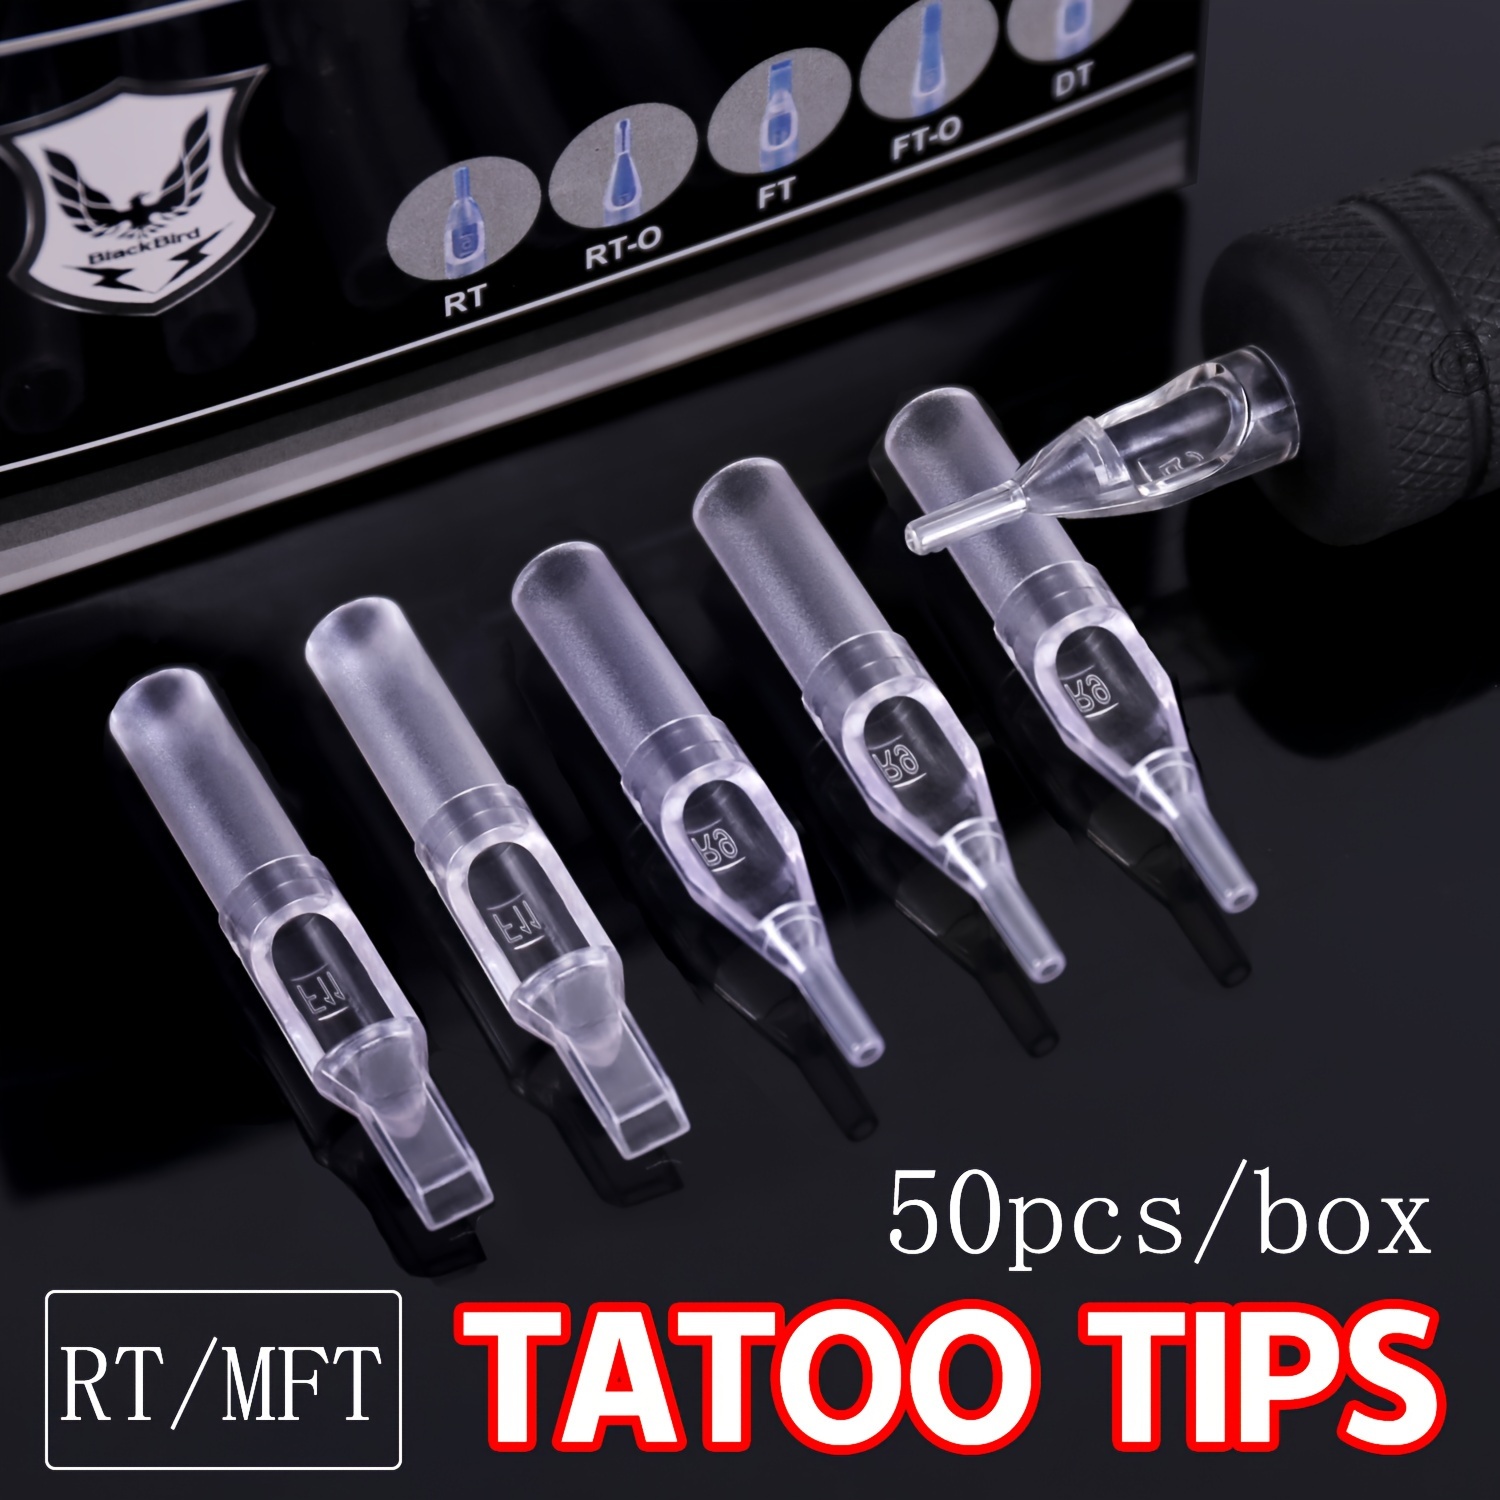 5 PCS Box - ROUND MAGNUM Tips Standard Tattoo Needles Sterile